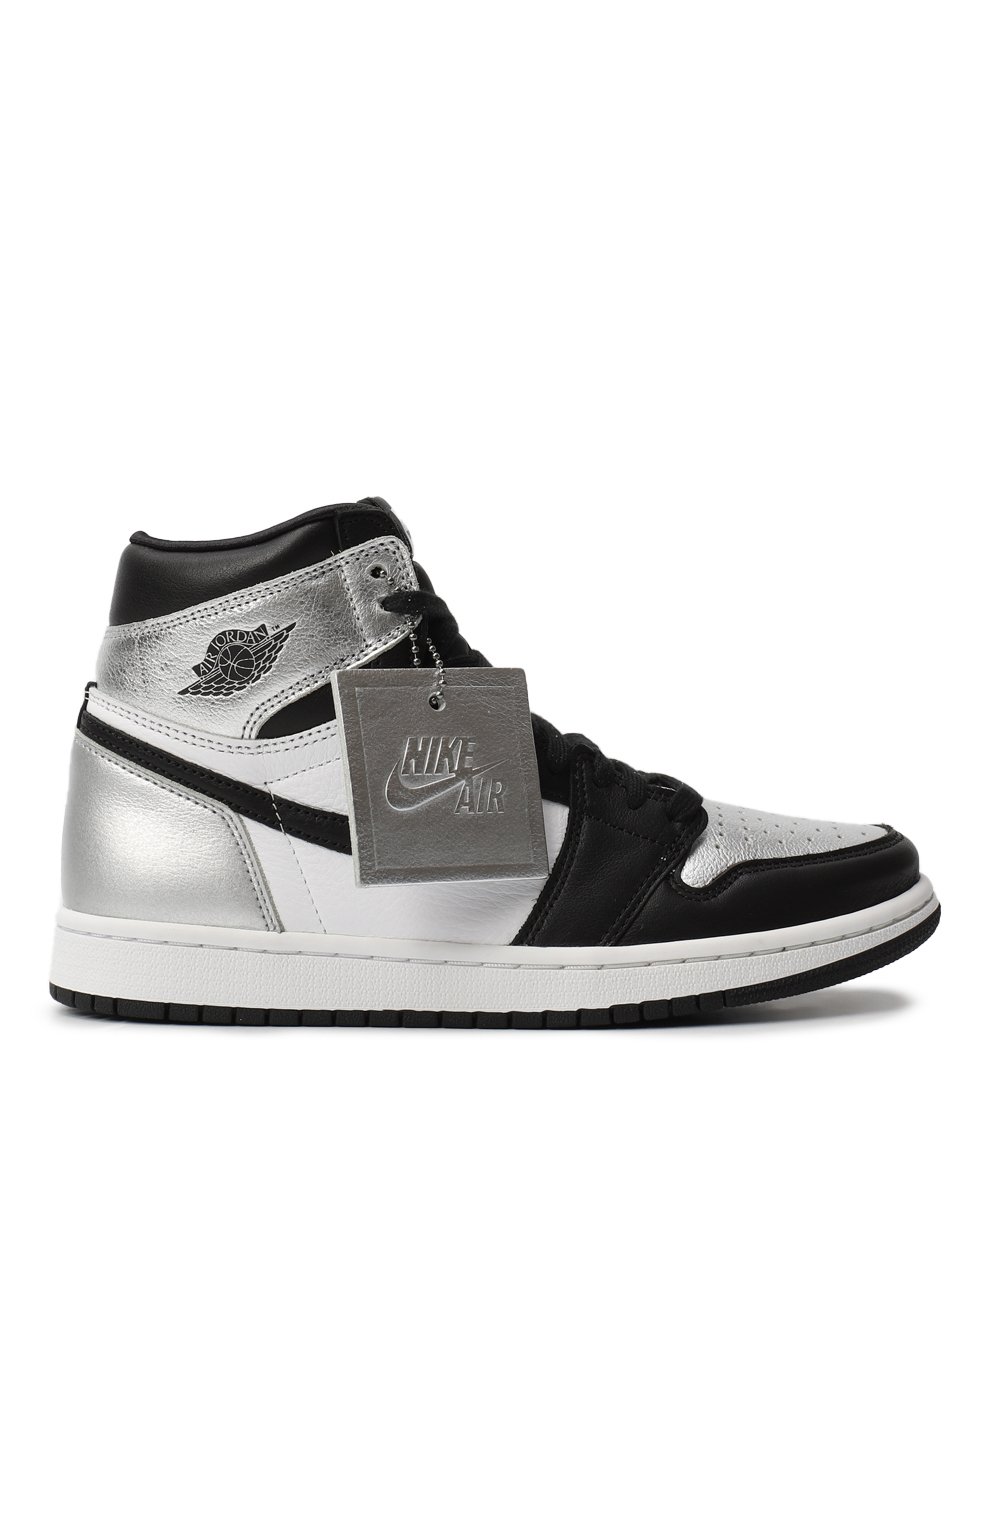 Кеды Air Jordan 1 Retro High Silver Toe | Nike | Разноцветный - 5